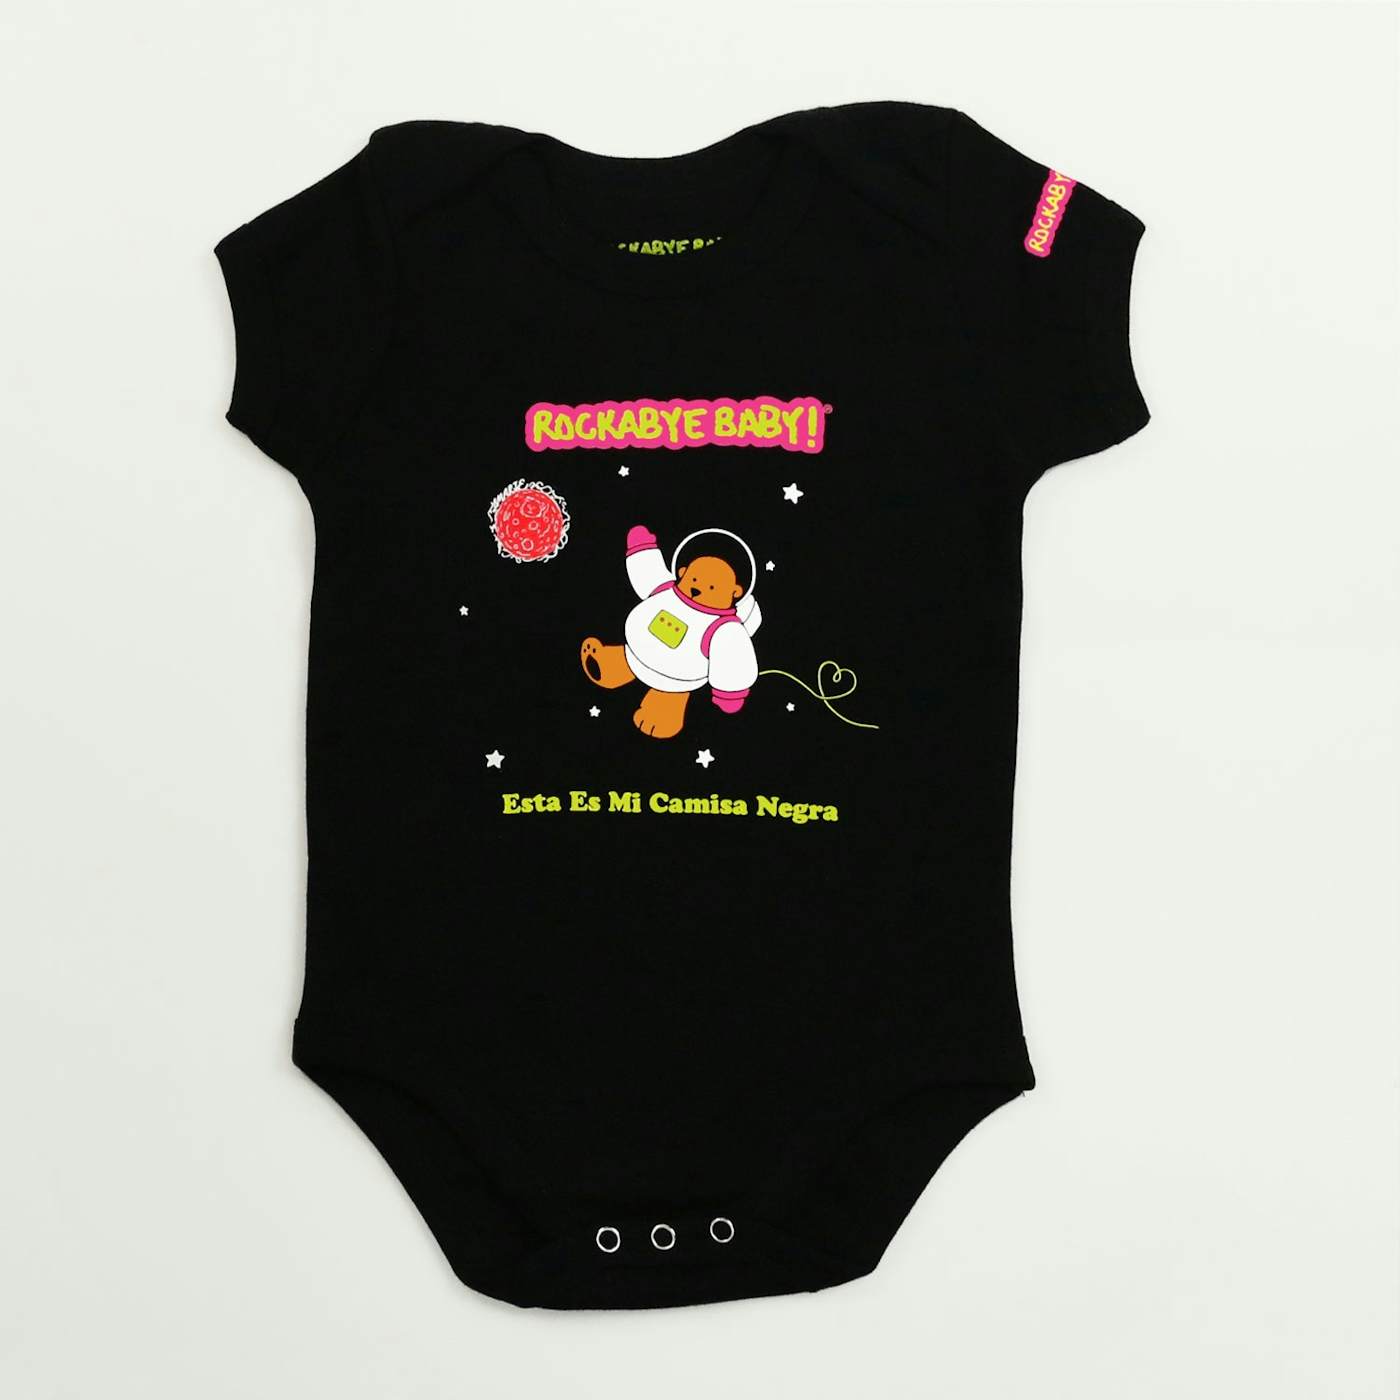 Rockabye Baby! Organic Baby Bodysuit ("Lullaby Renditions of Juanes" Album Art on Black)